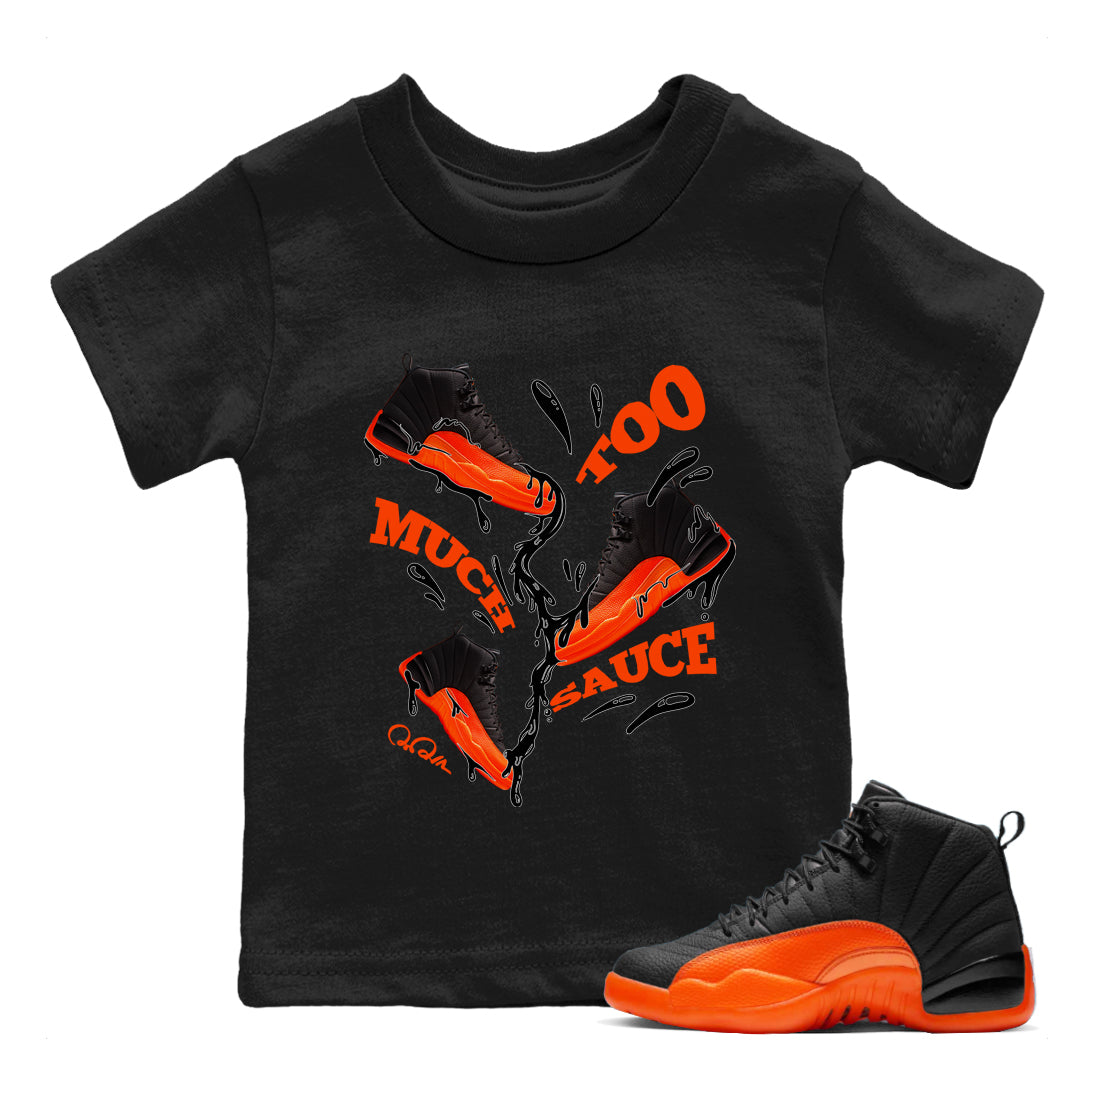 Air Jordan 12 Brilliant Orange Sneaker Match Tees Too Much Sauce Sneaker Tees AJ12 Brilliant Orange Sneaker Release Tees Kids Shirts Black 1